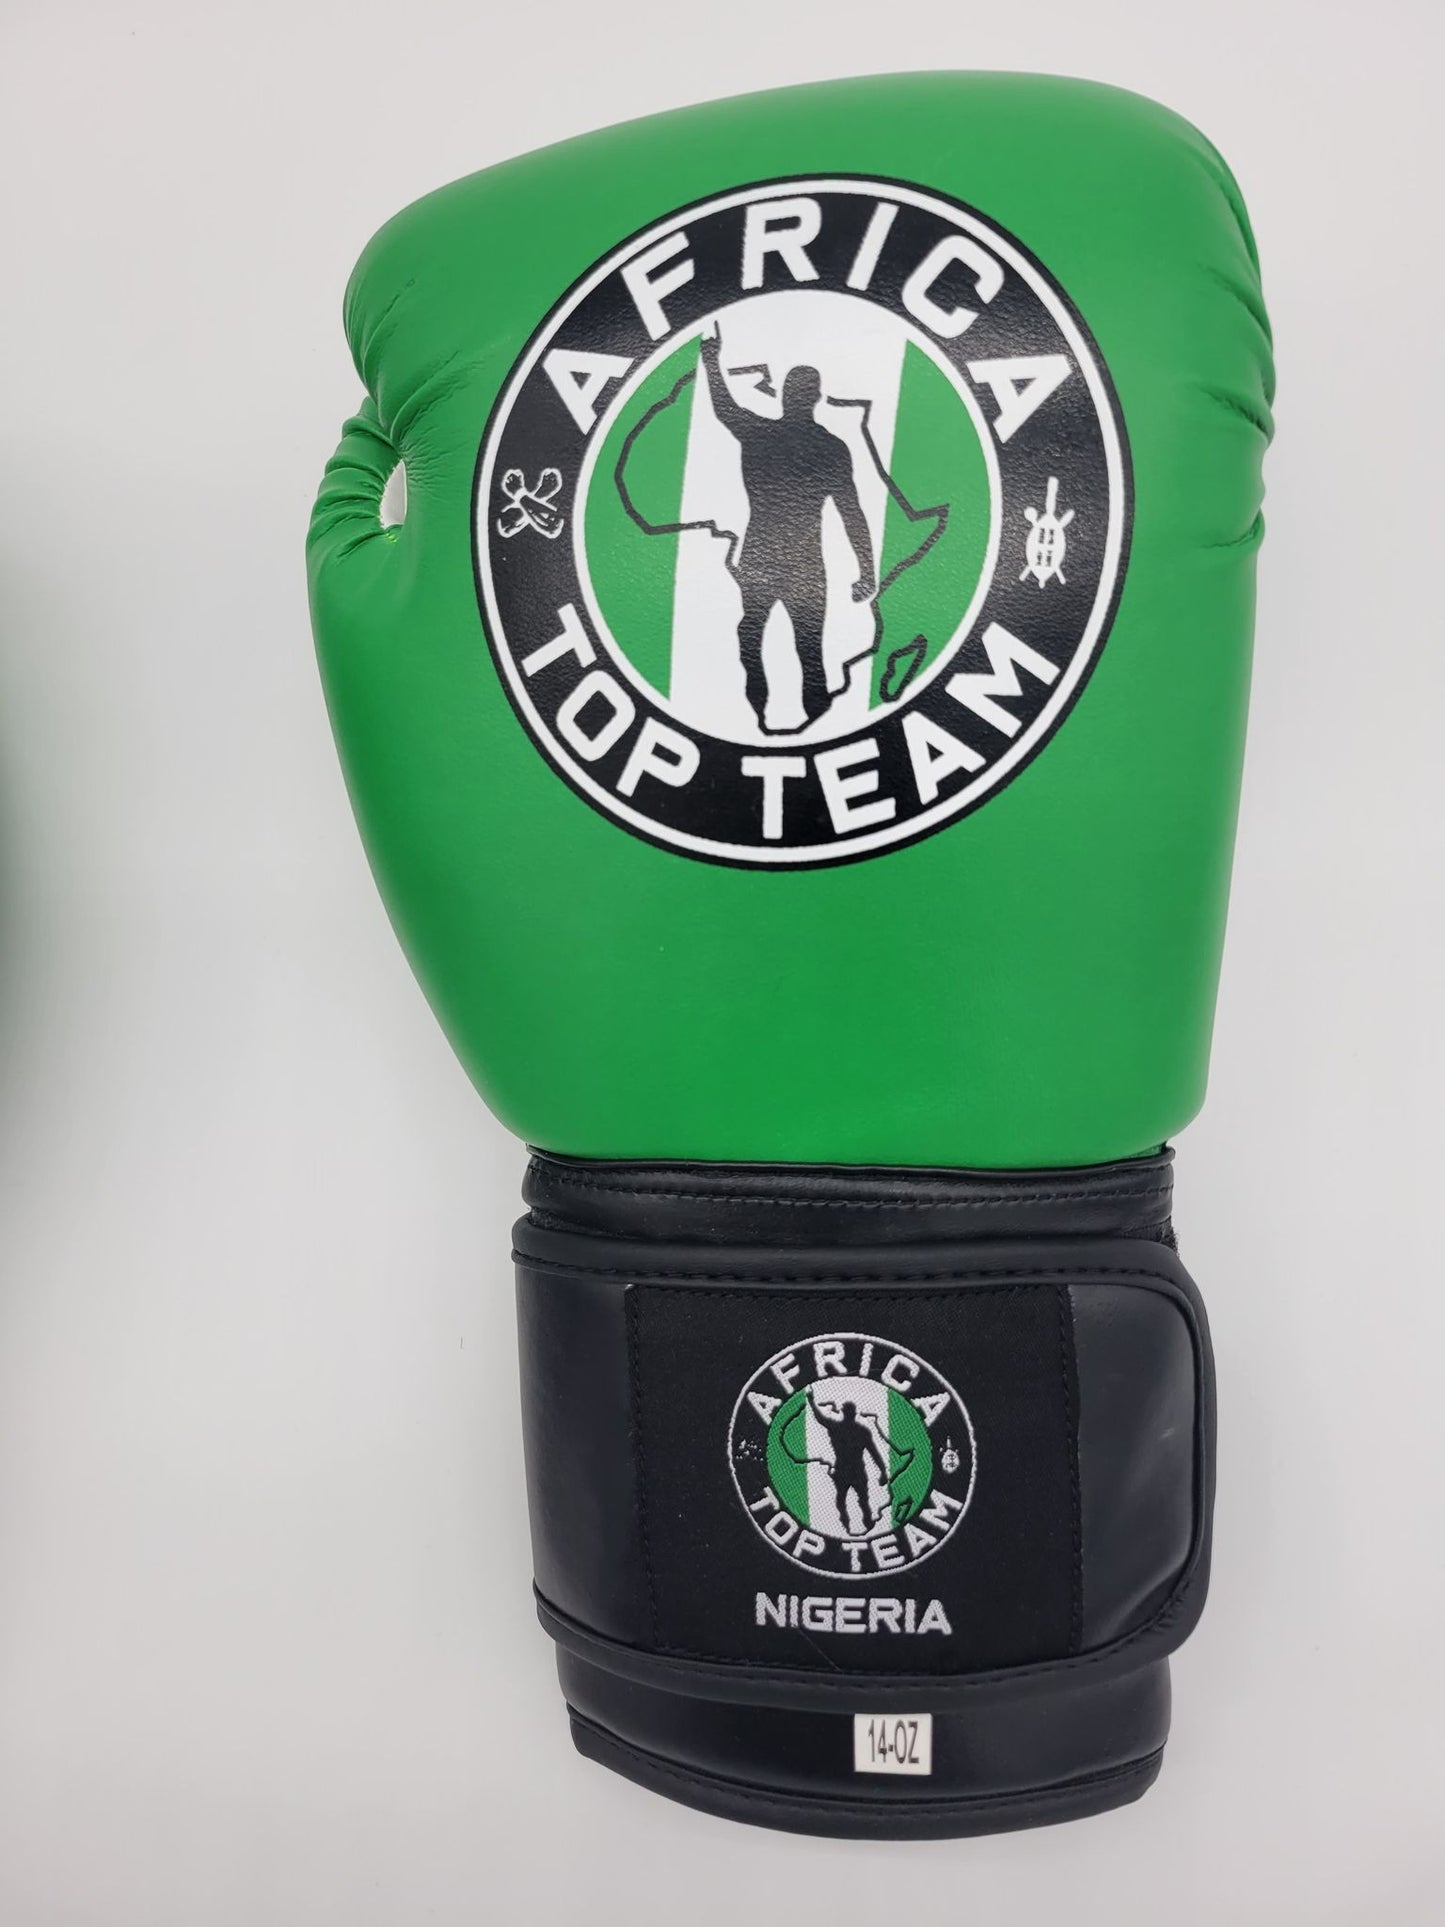 Africa Top Team Nigeria Green/Black 14oz Training gloves   Boxing, MMA